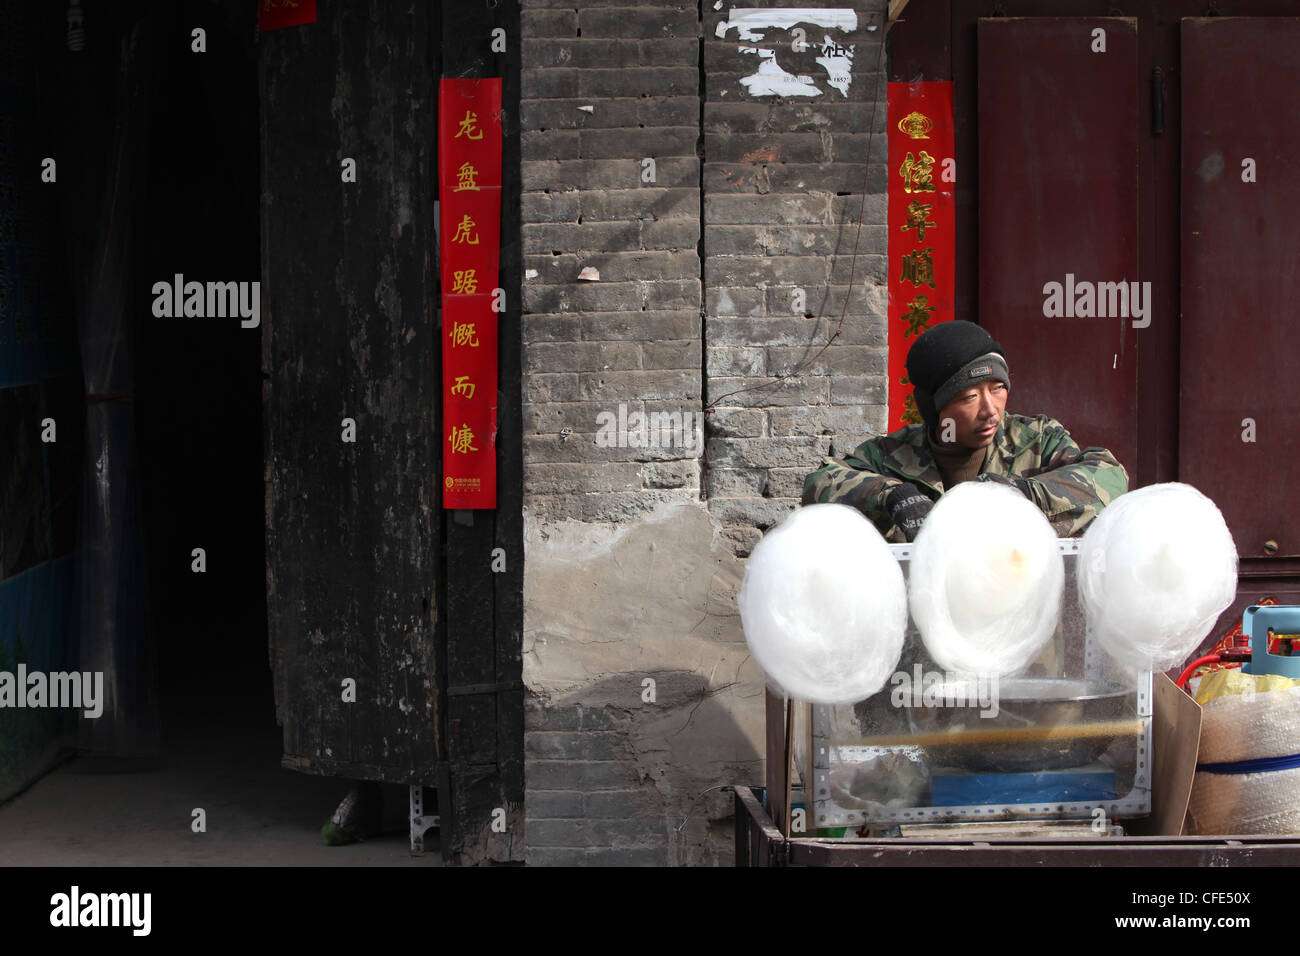 Pingyao, Qing dinasty old town, Shanxi province, China Stock Photo